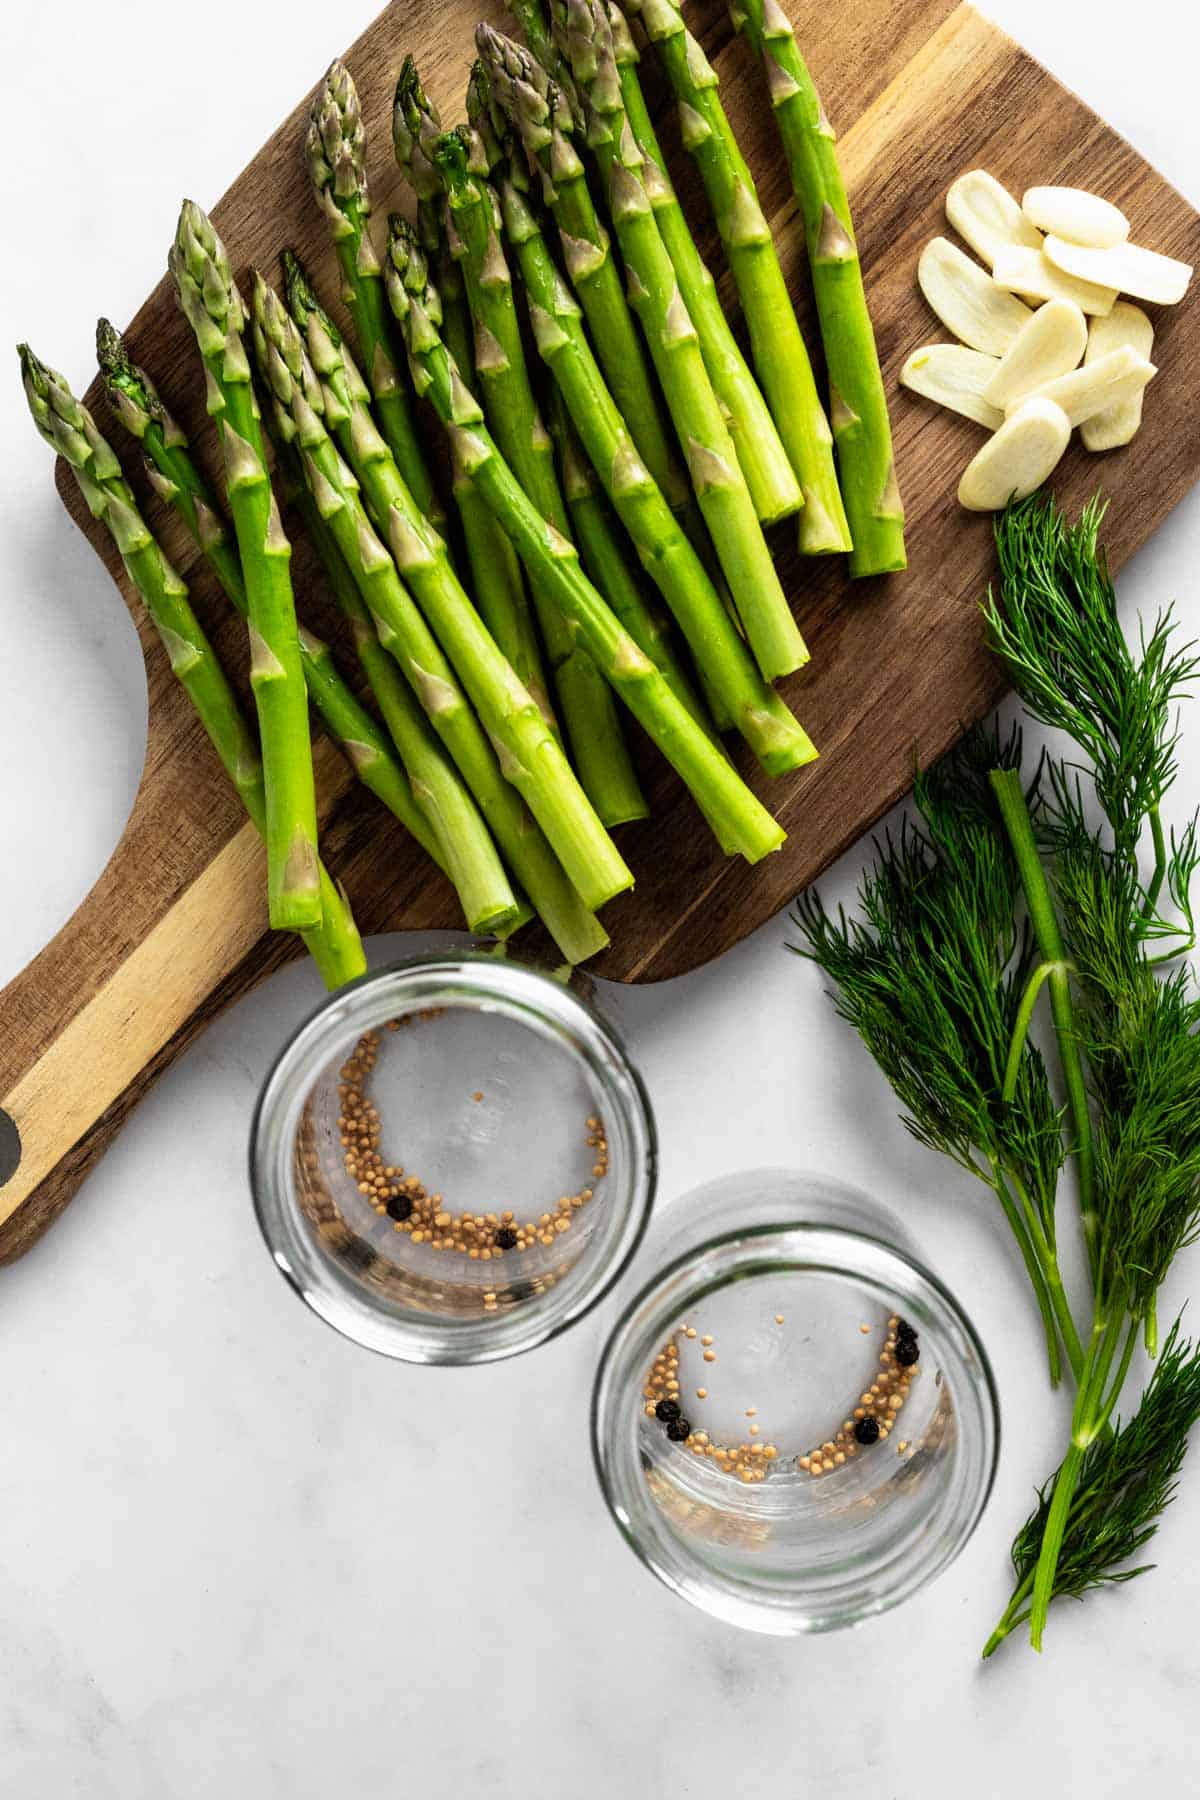 pickled asparagus recipe ingredients.